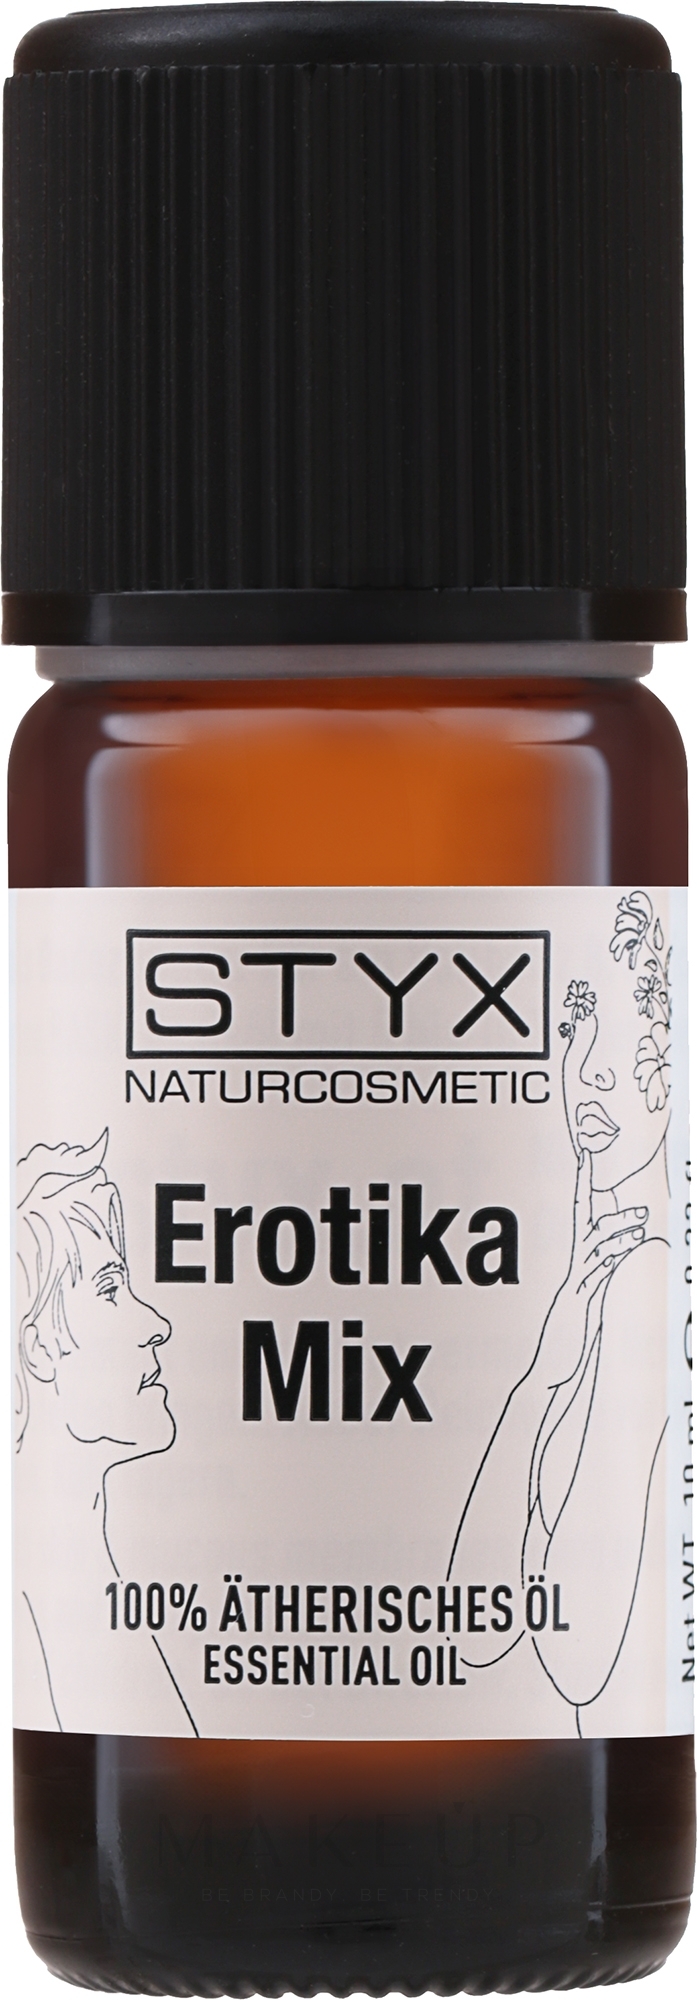 Ätherisches Öl Erotika Mix - Styx Naturcosmetic Erotica Mix — Foto 10 ml